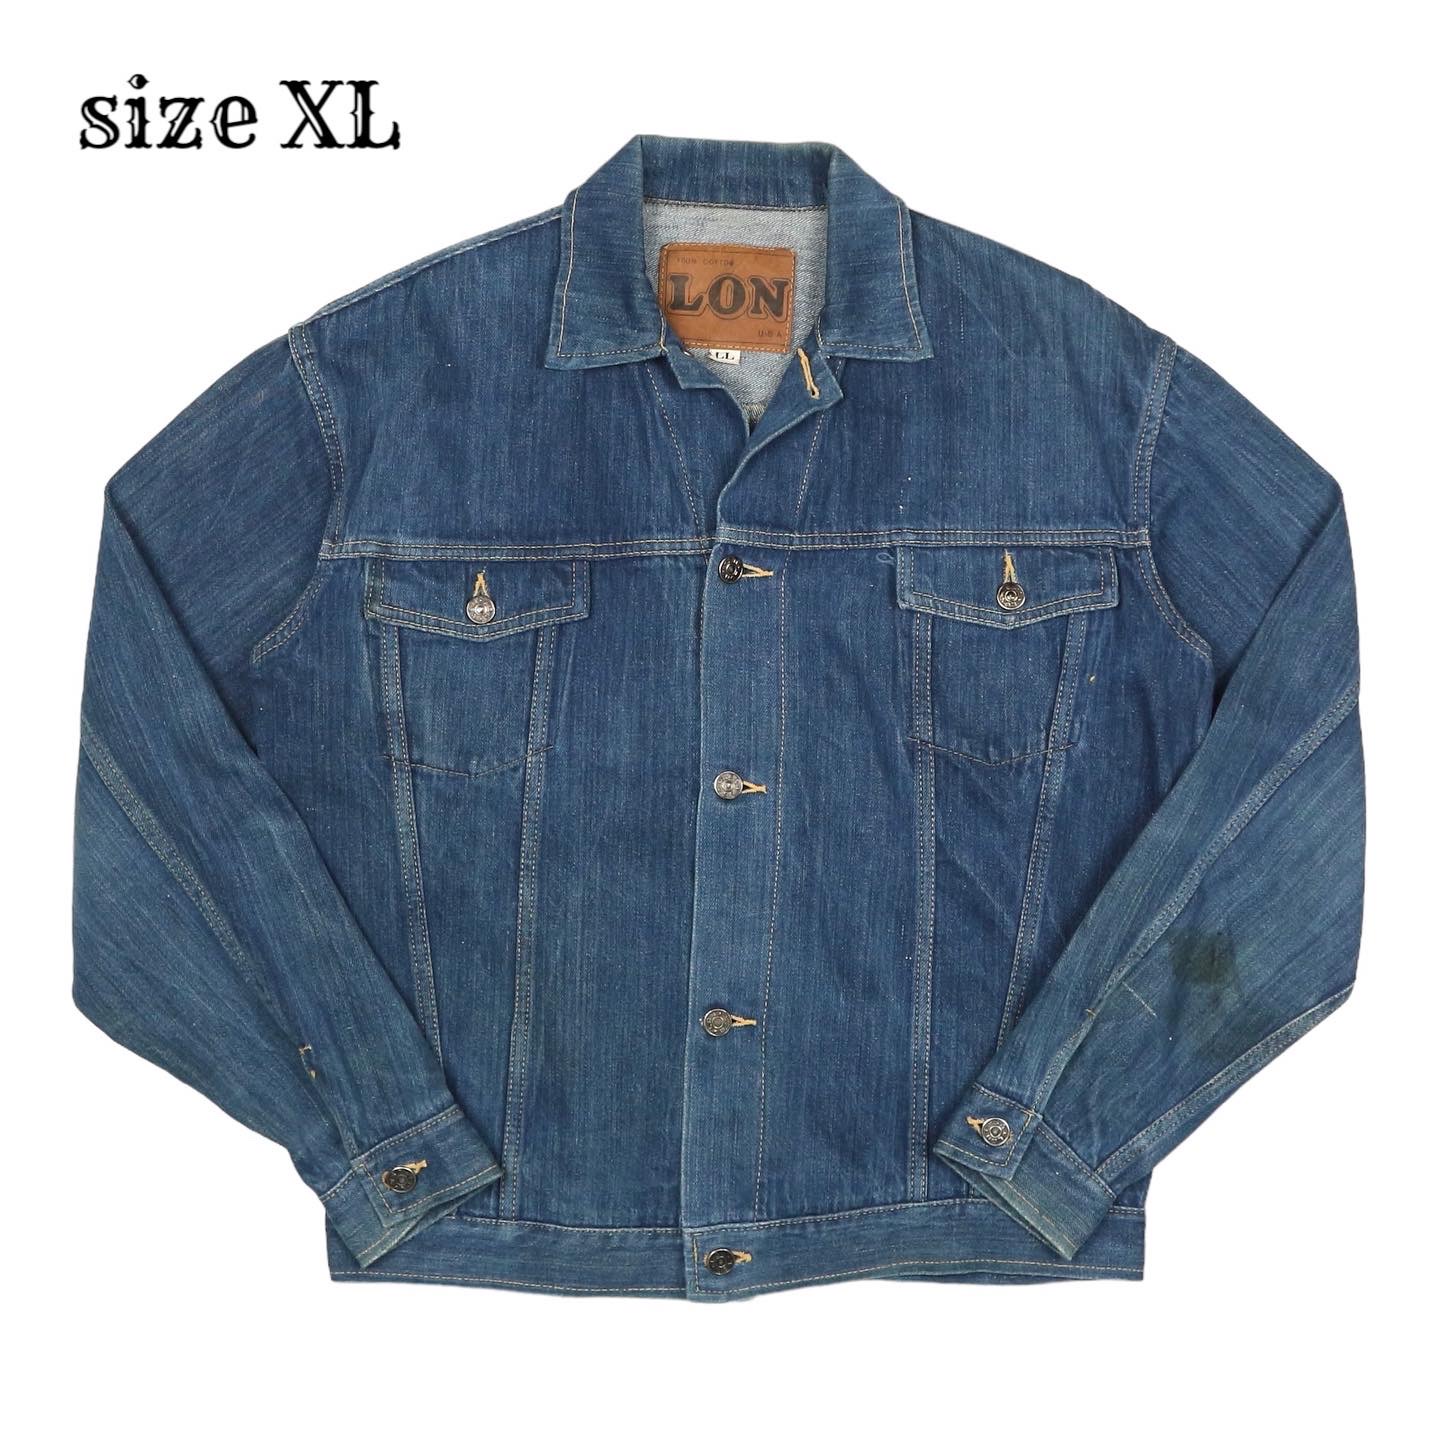 LON USA Denim Jacket Size XL